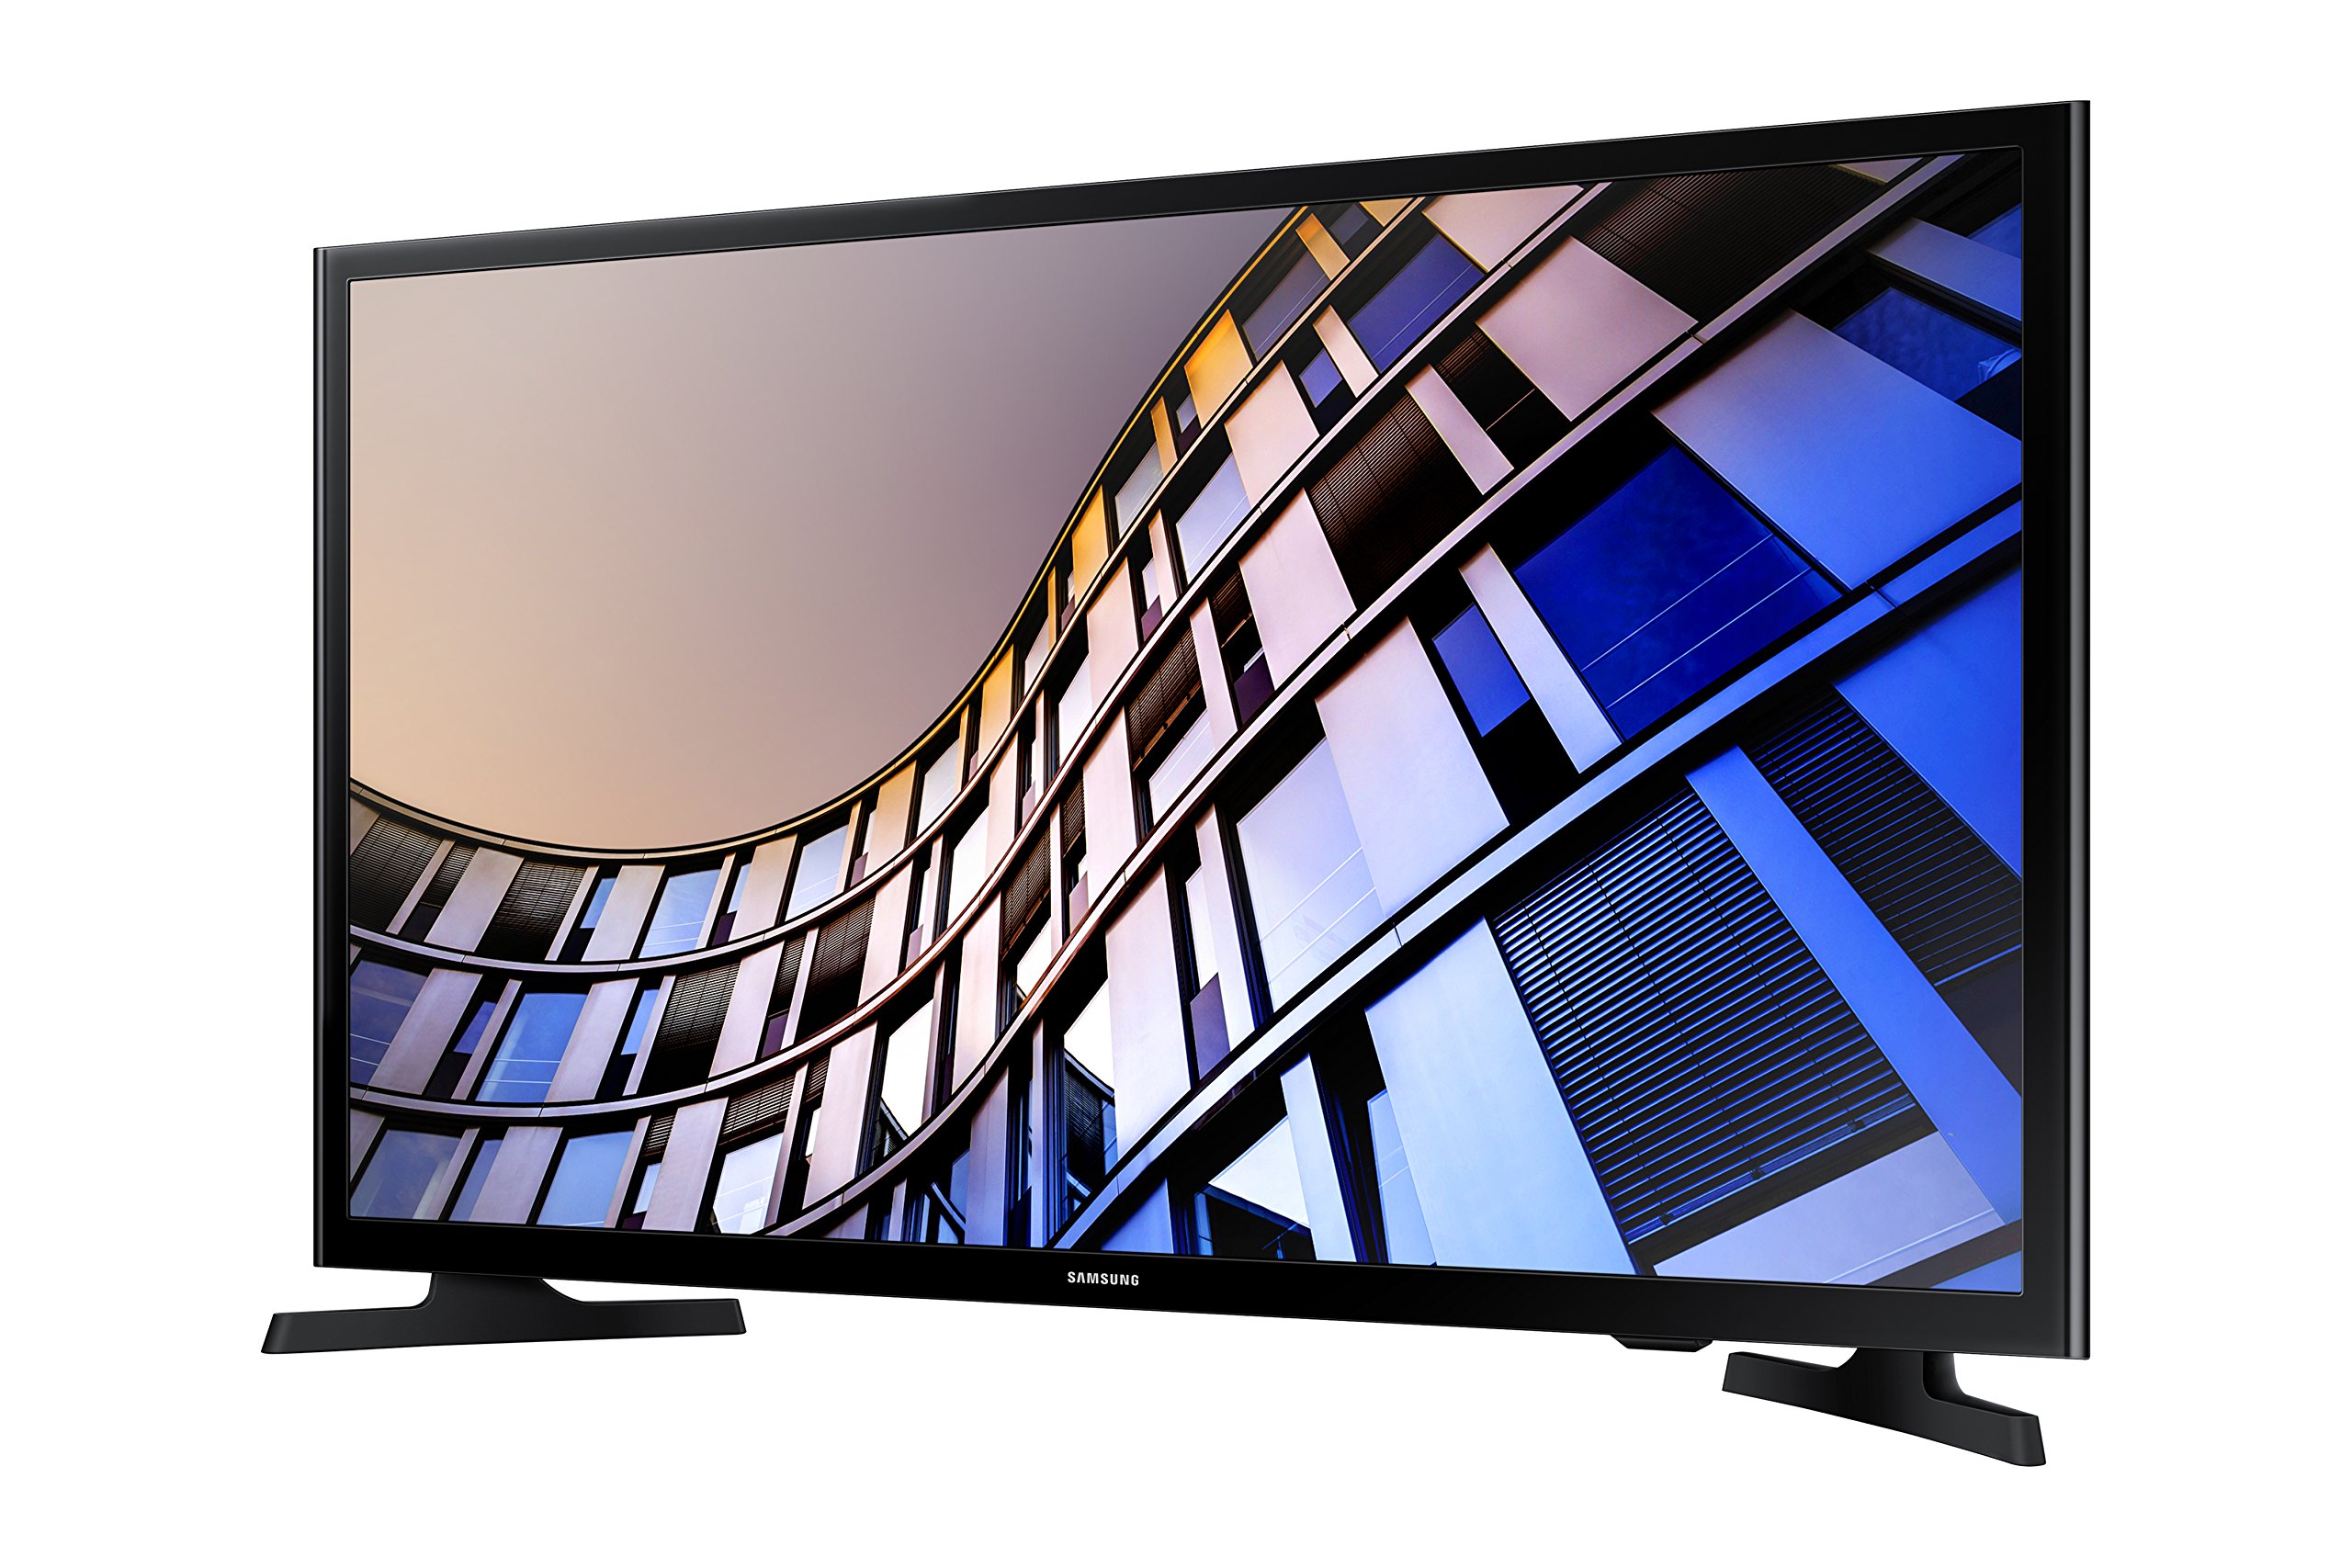 SAMSUNG Electronics UN32M4500A 32-Inch 720p Smart LED TV (2017 Model)